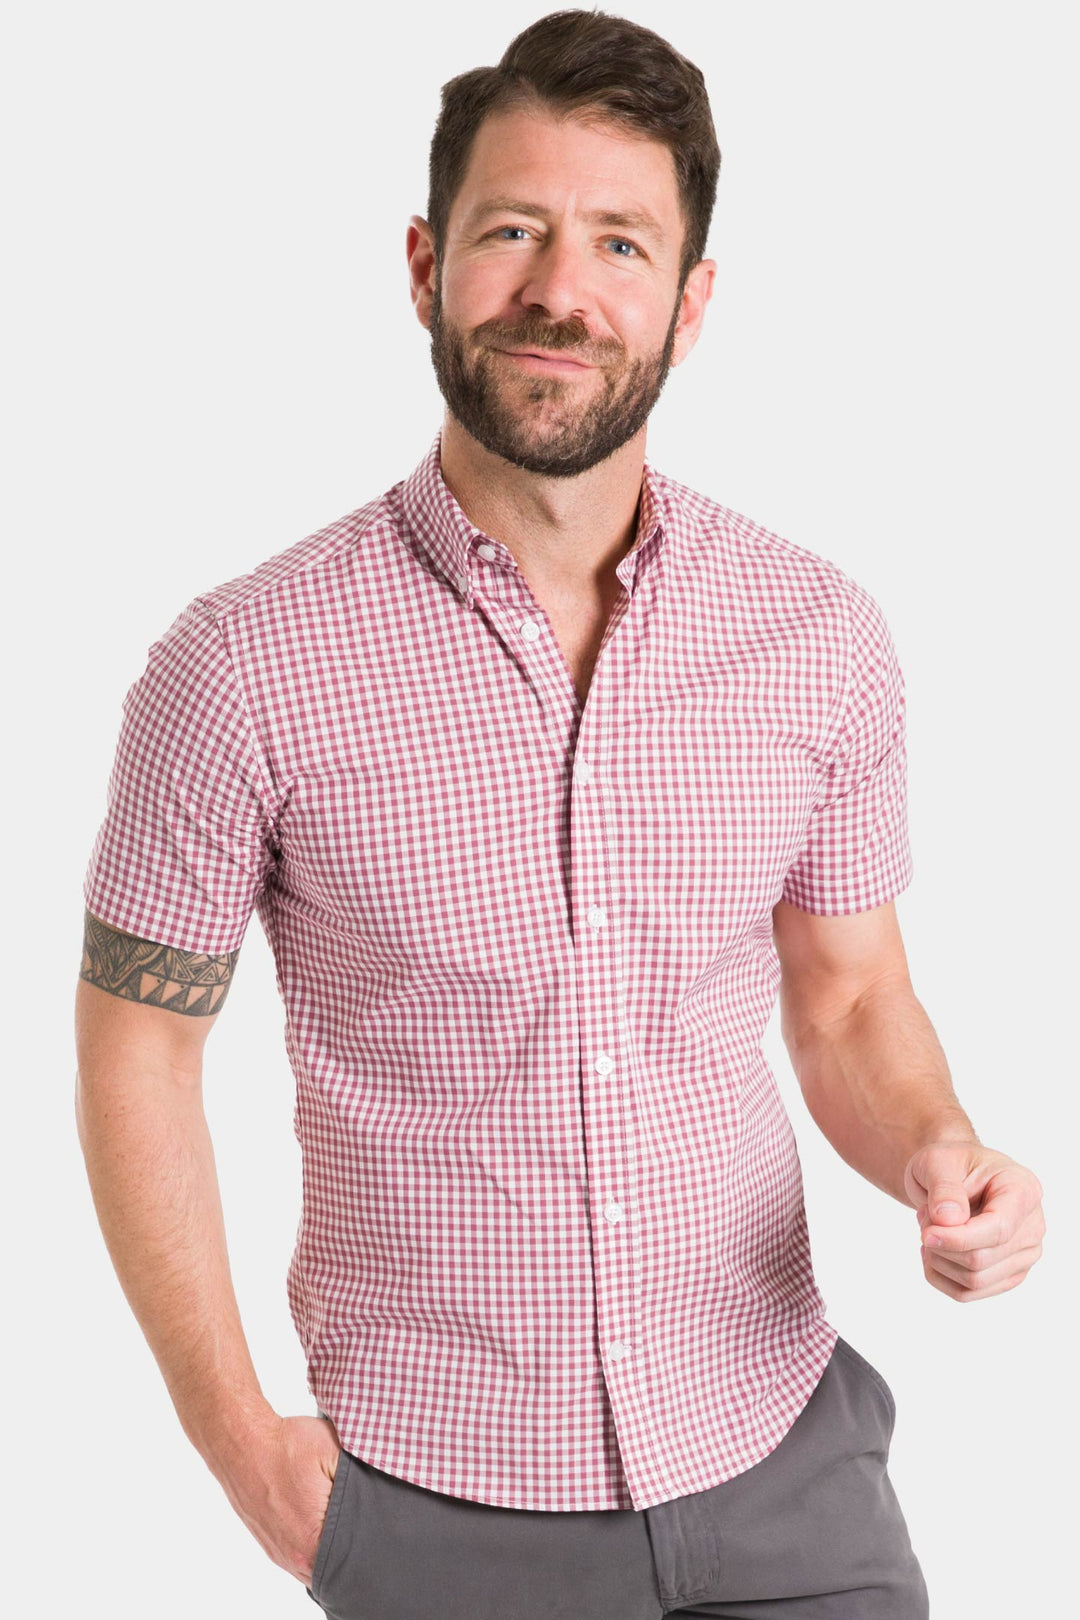 Buy Brick Gingham Plaid Short Sleeve Shirt for Short Men | Ash & Erie   Short Sleeve Everyday Shirts